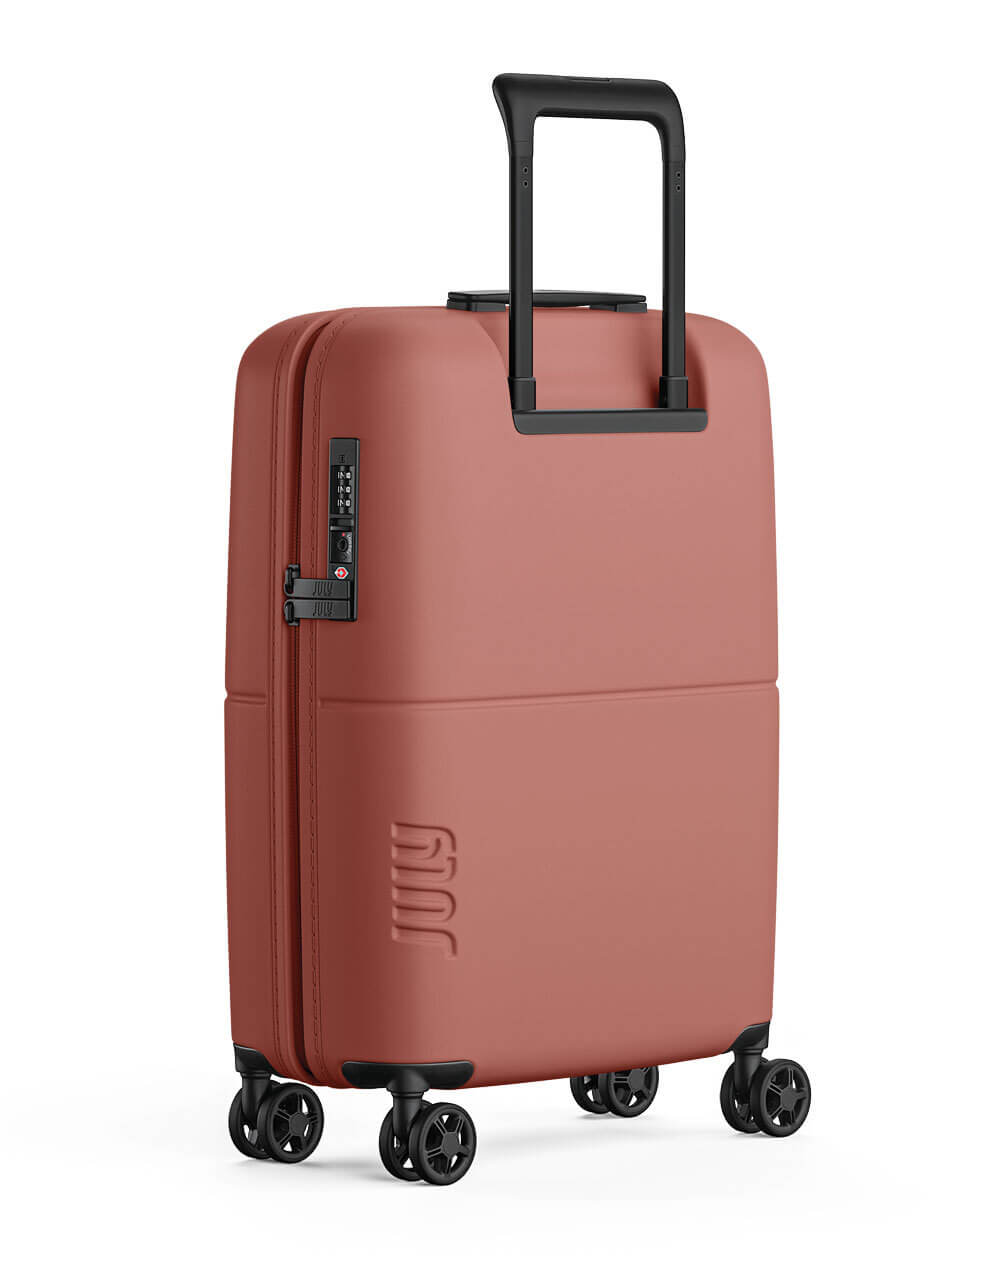 Stylish Luggage from July.com